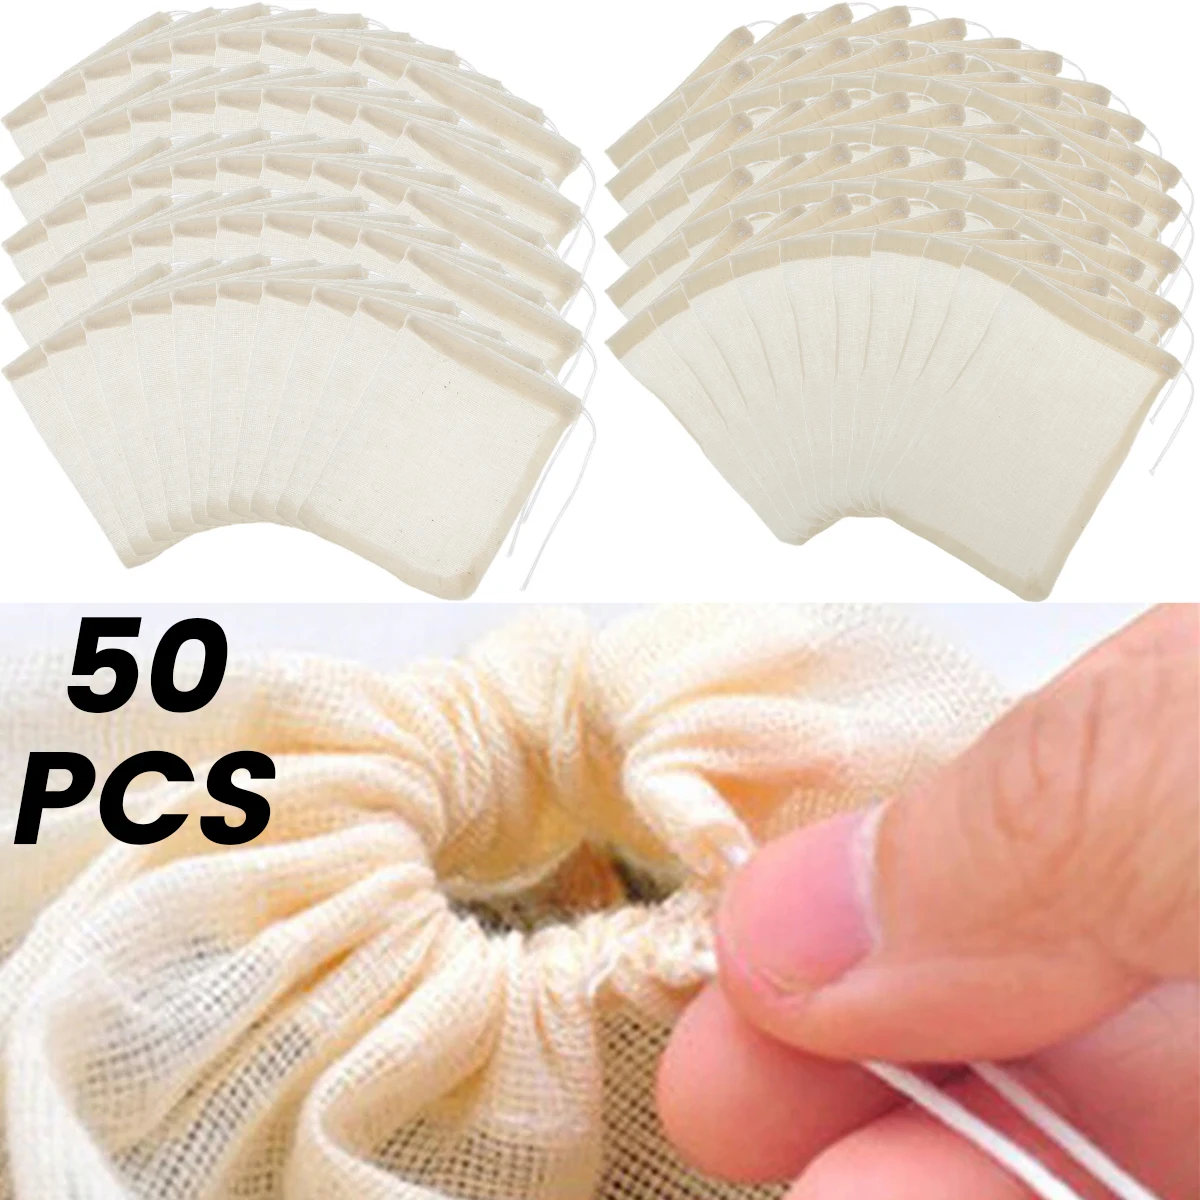 

NEW 100 Pcs Drawstring Cotton Bags Reusable Natural Muslin Drawstring Bags Easy to Seal Muslin Storage Bag Small Cotton String